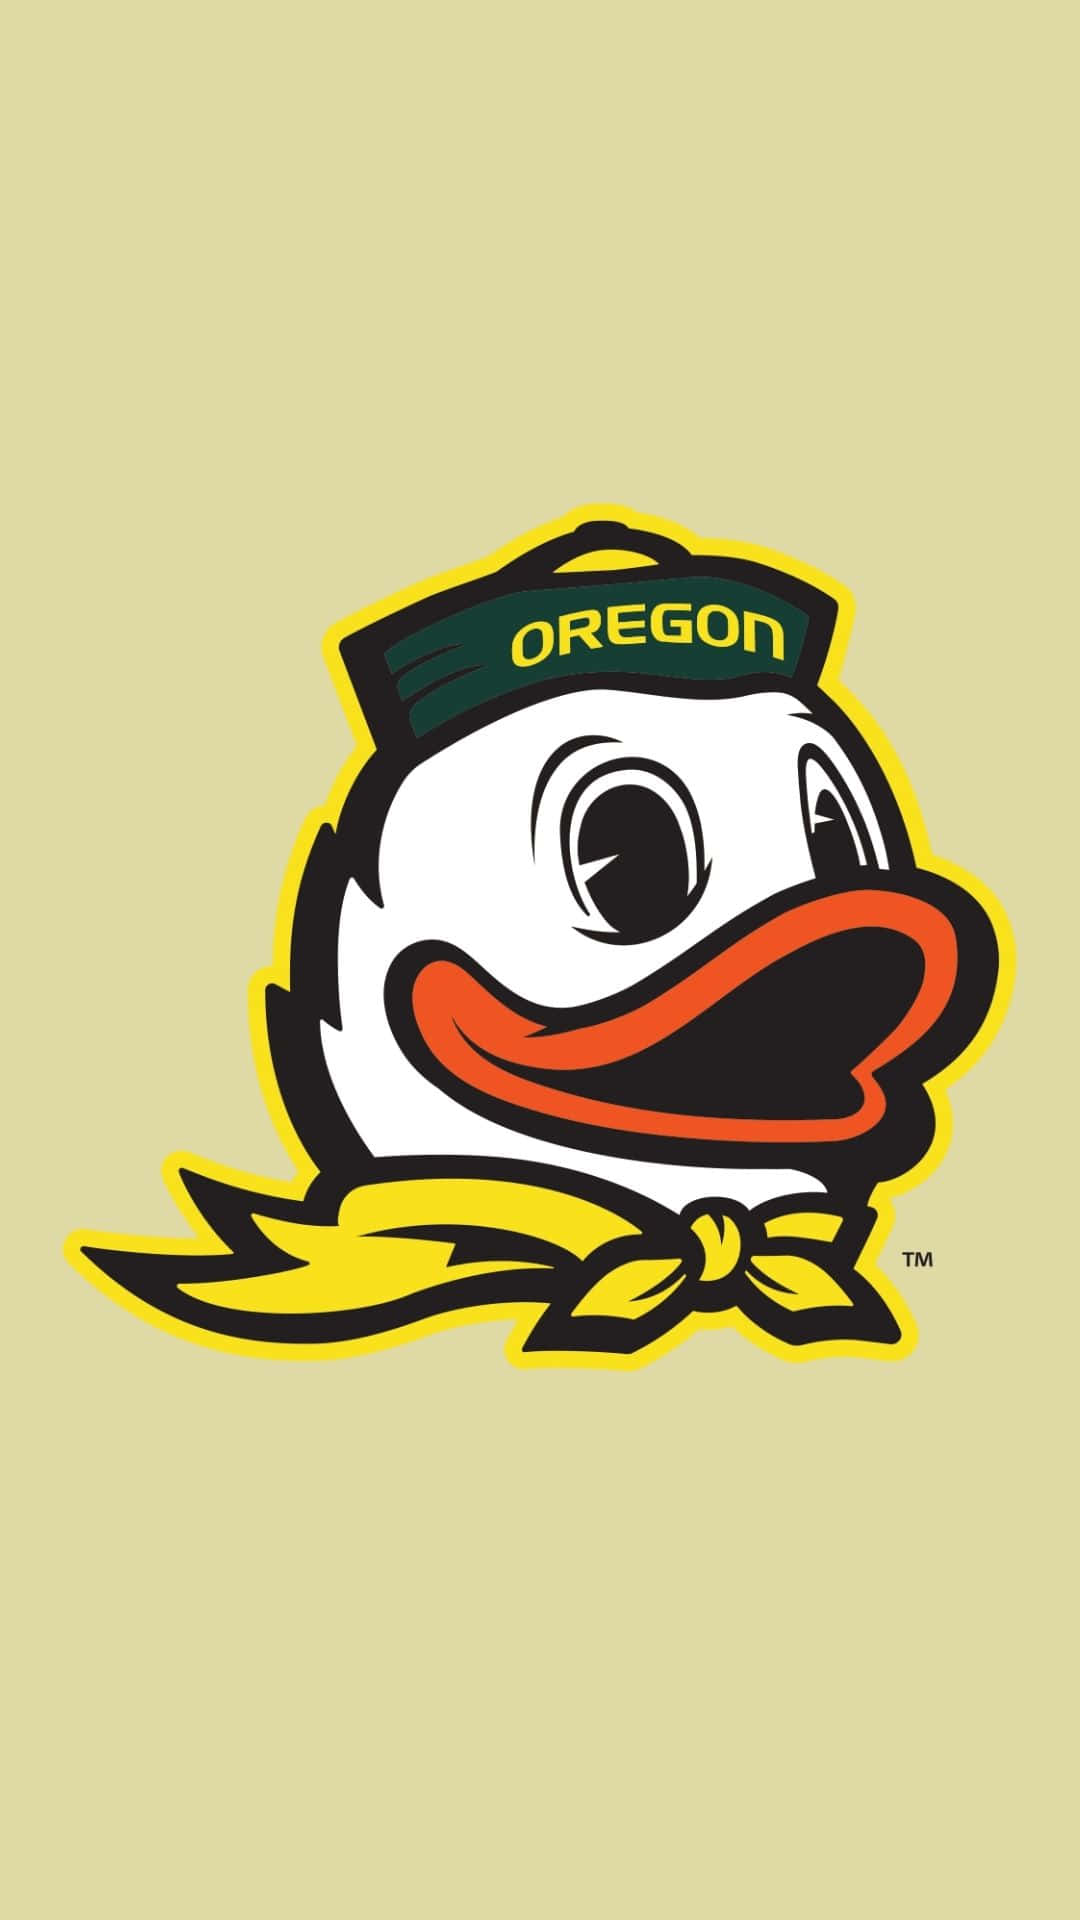 Oregon Ducks Football Team In Action